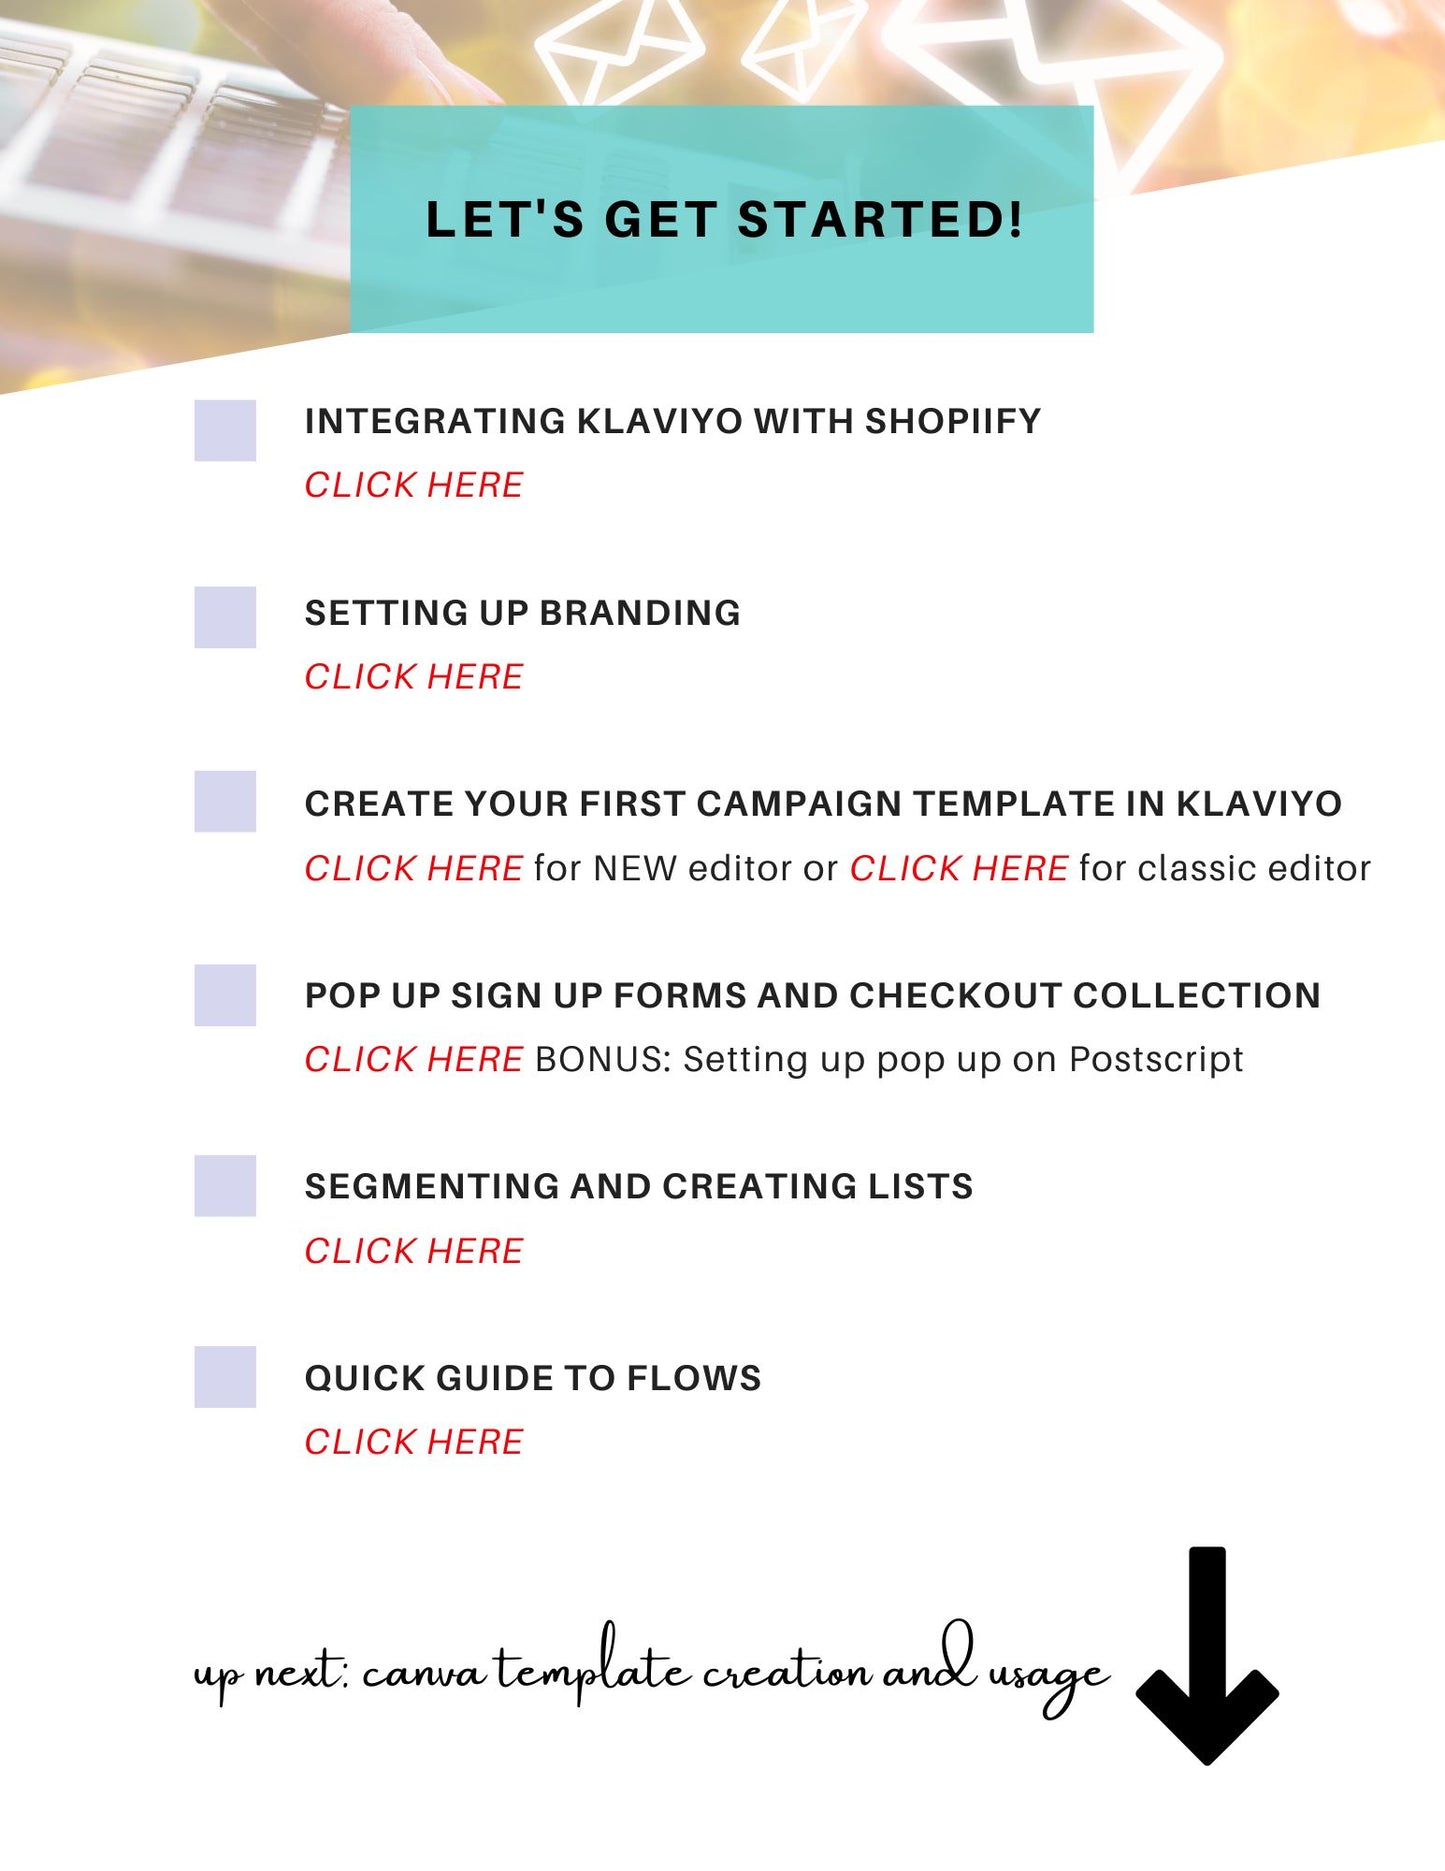 Beginner's Guide to Klaviyo: For Retailers